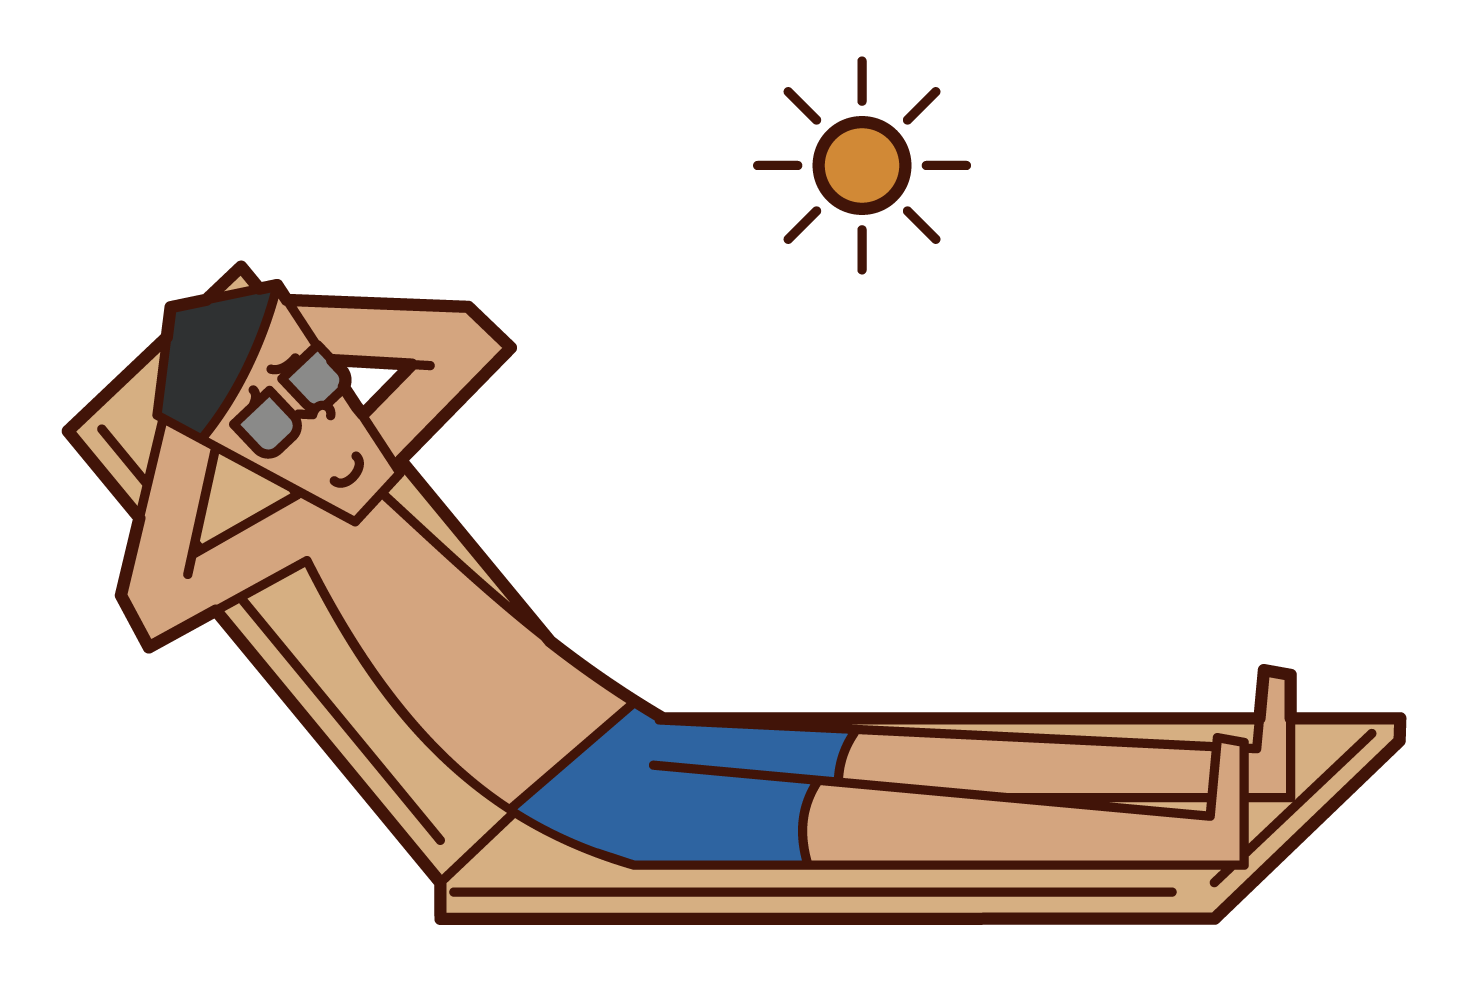 Illustration of a man sunbathing on the beach